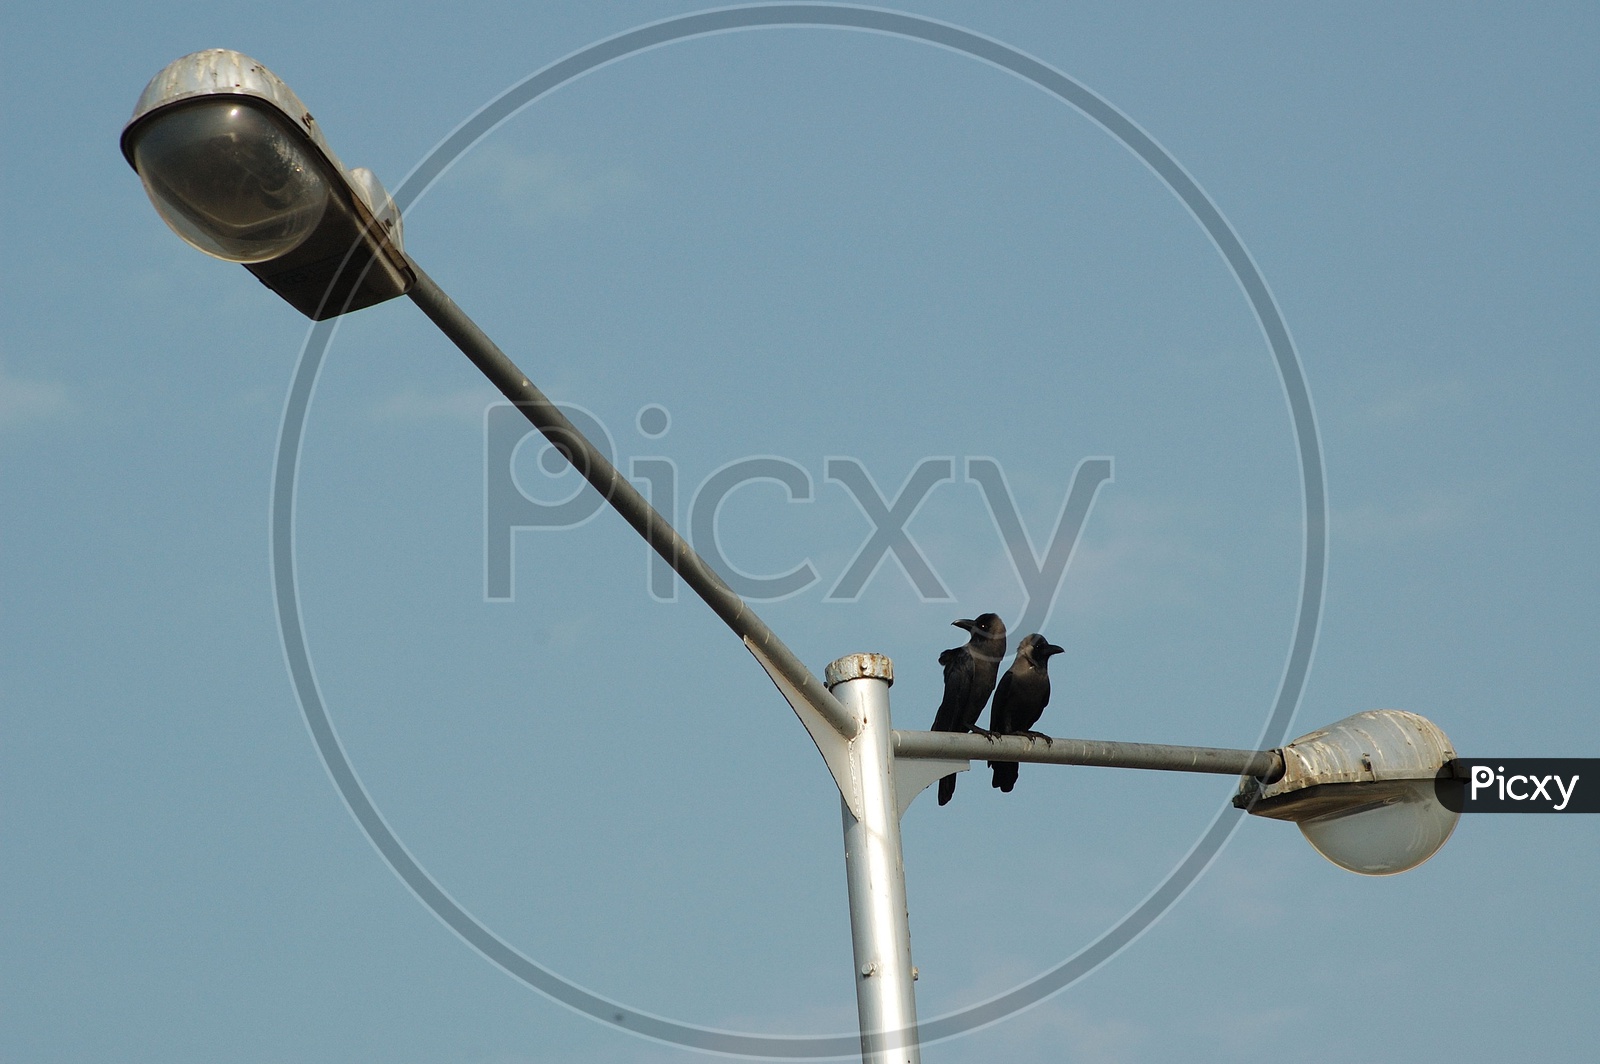 Crows on street light